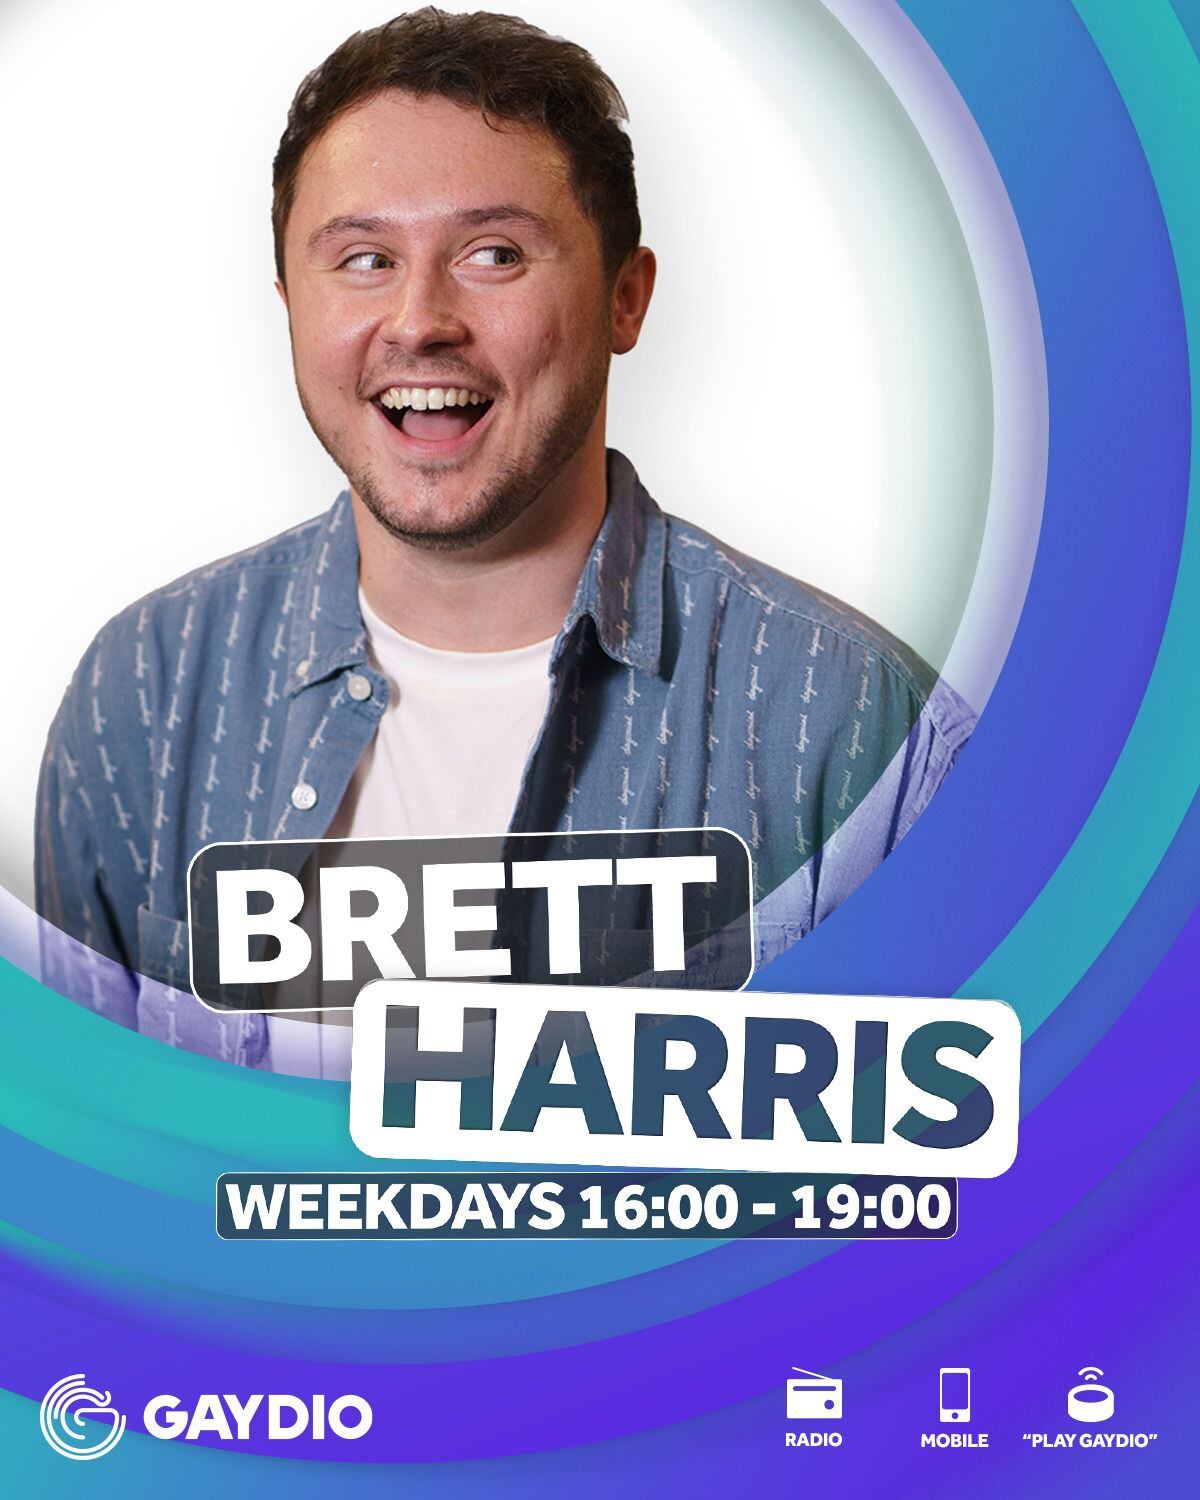 Brett Harris gets top spot on Gaydio radio station